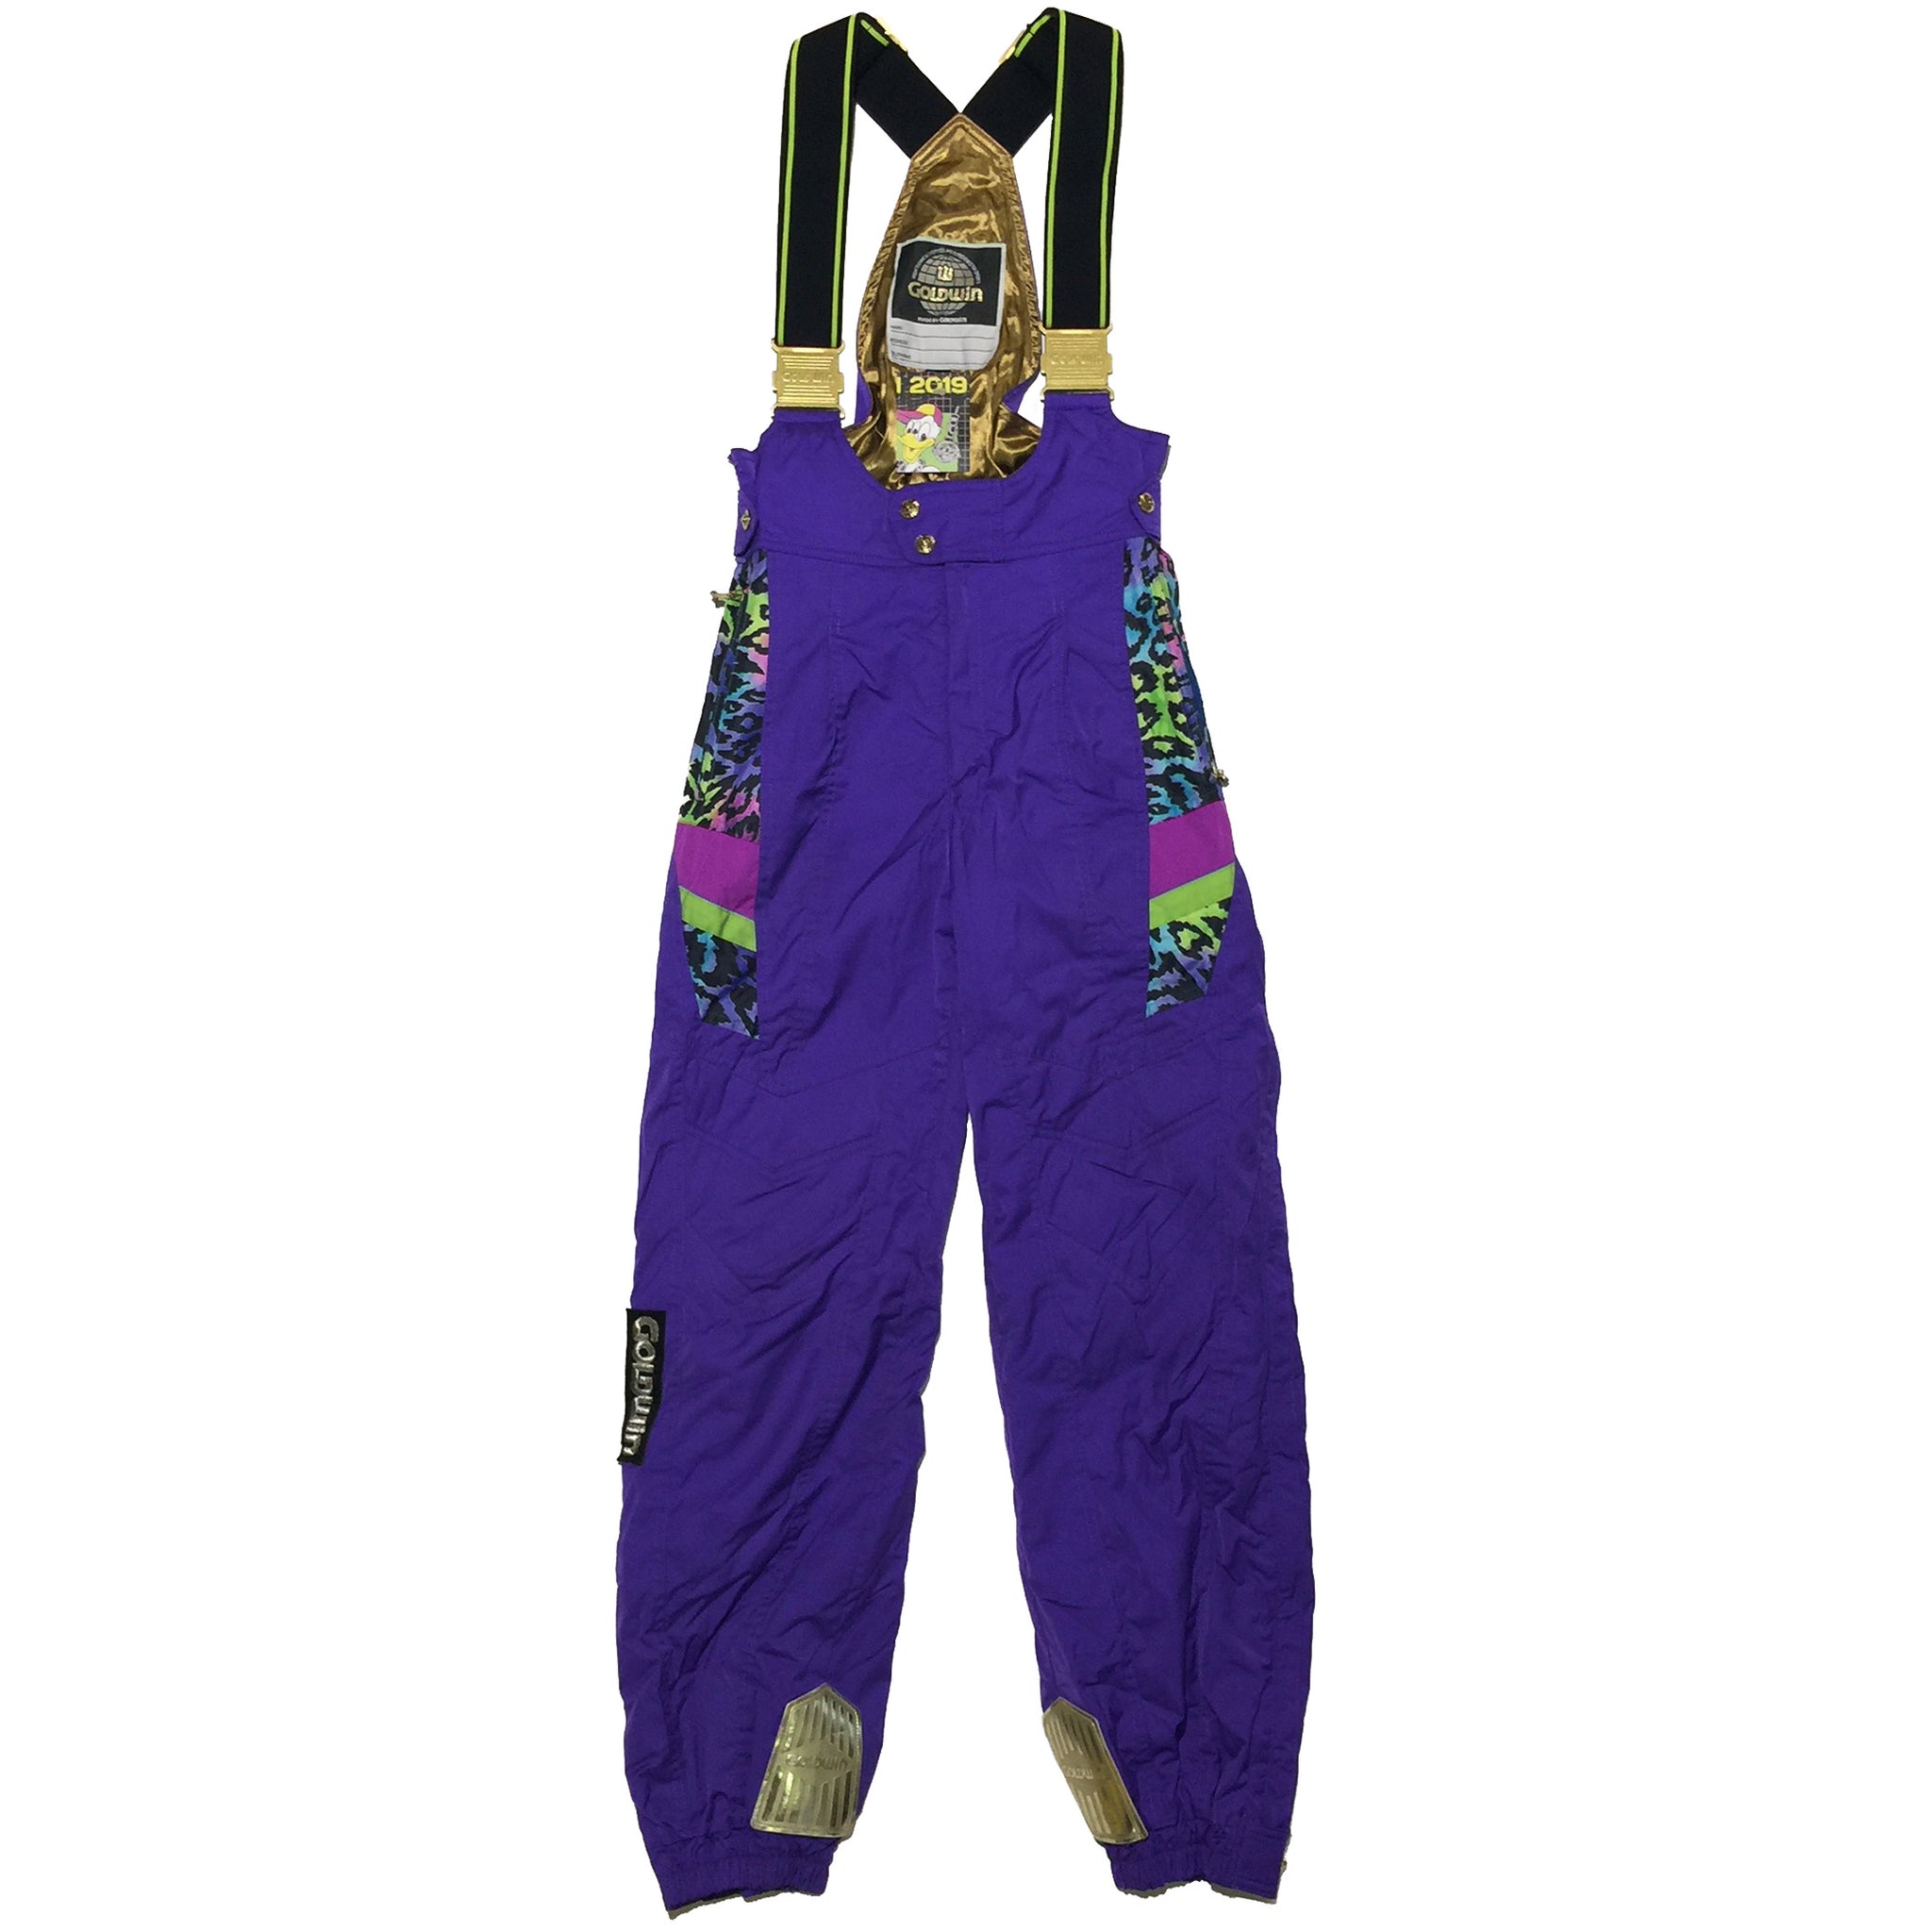 Goldwin Purple Ski Pants